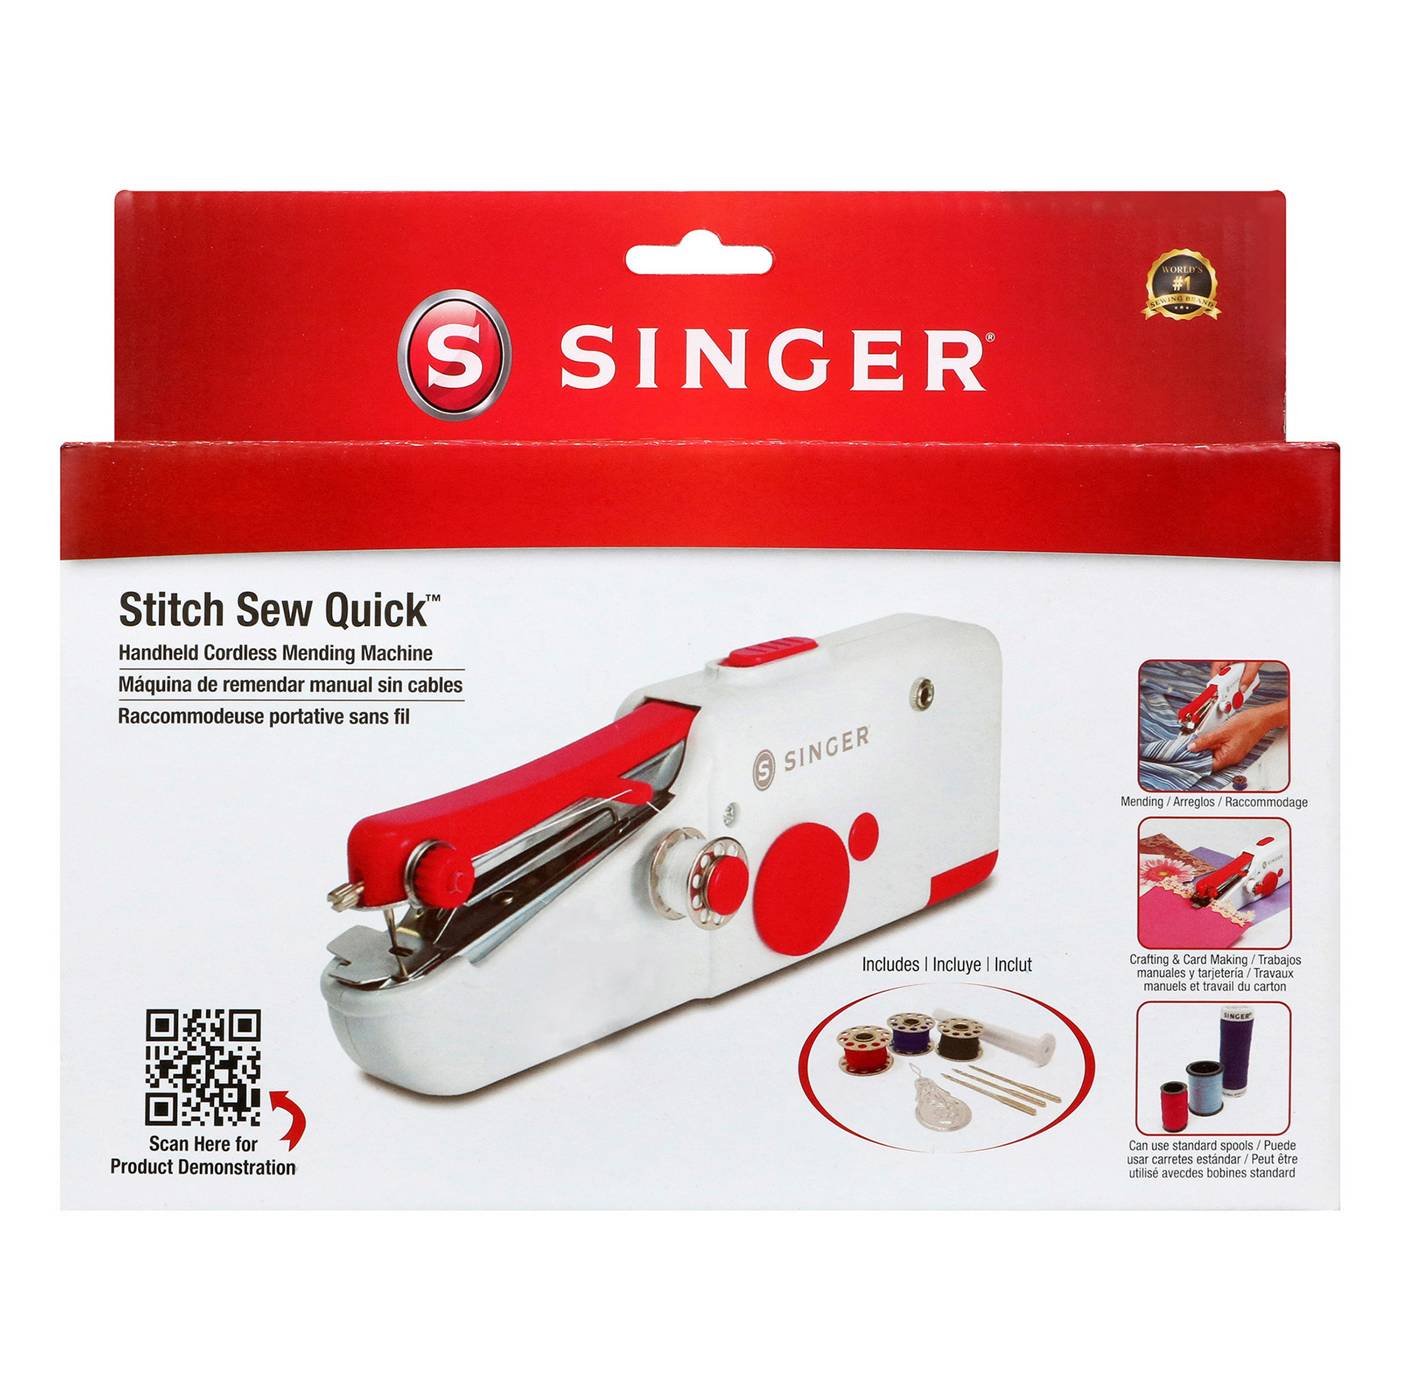 Singer Stitch Sew Quick + Handheld Cordless Mending Machine; image 1 of 3